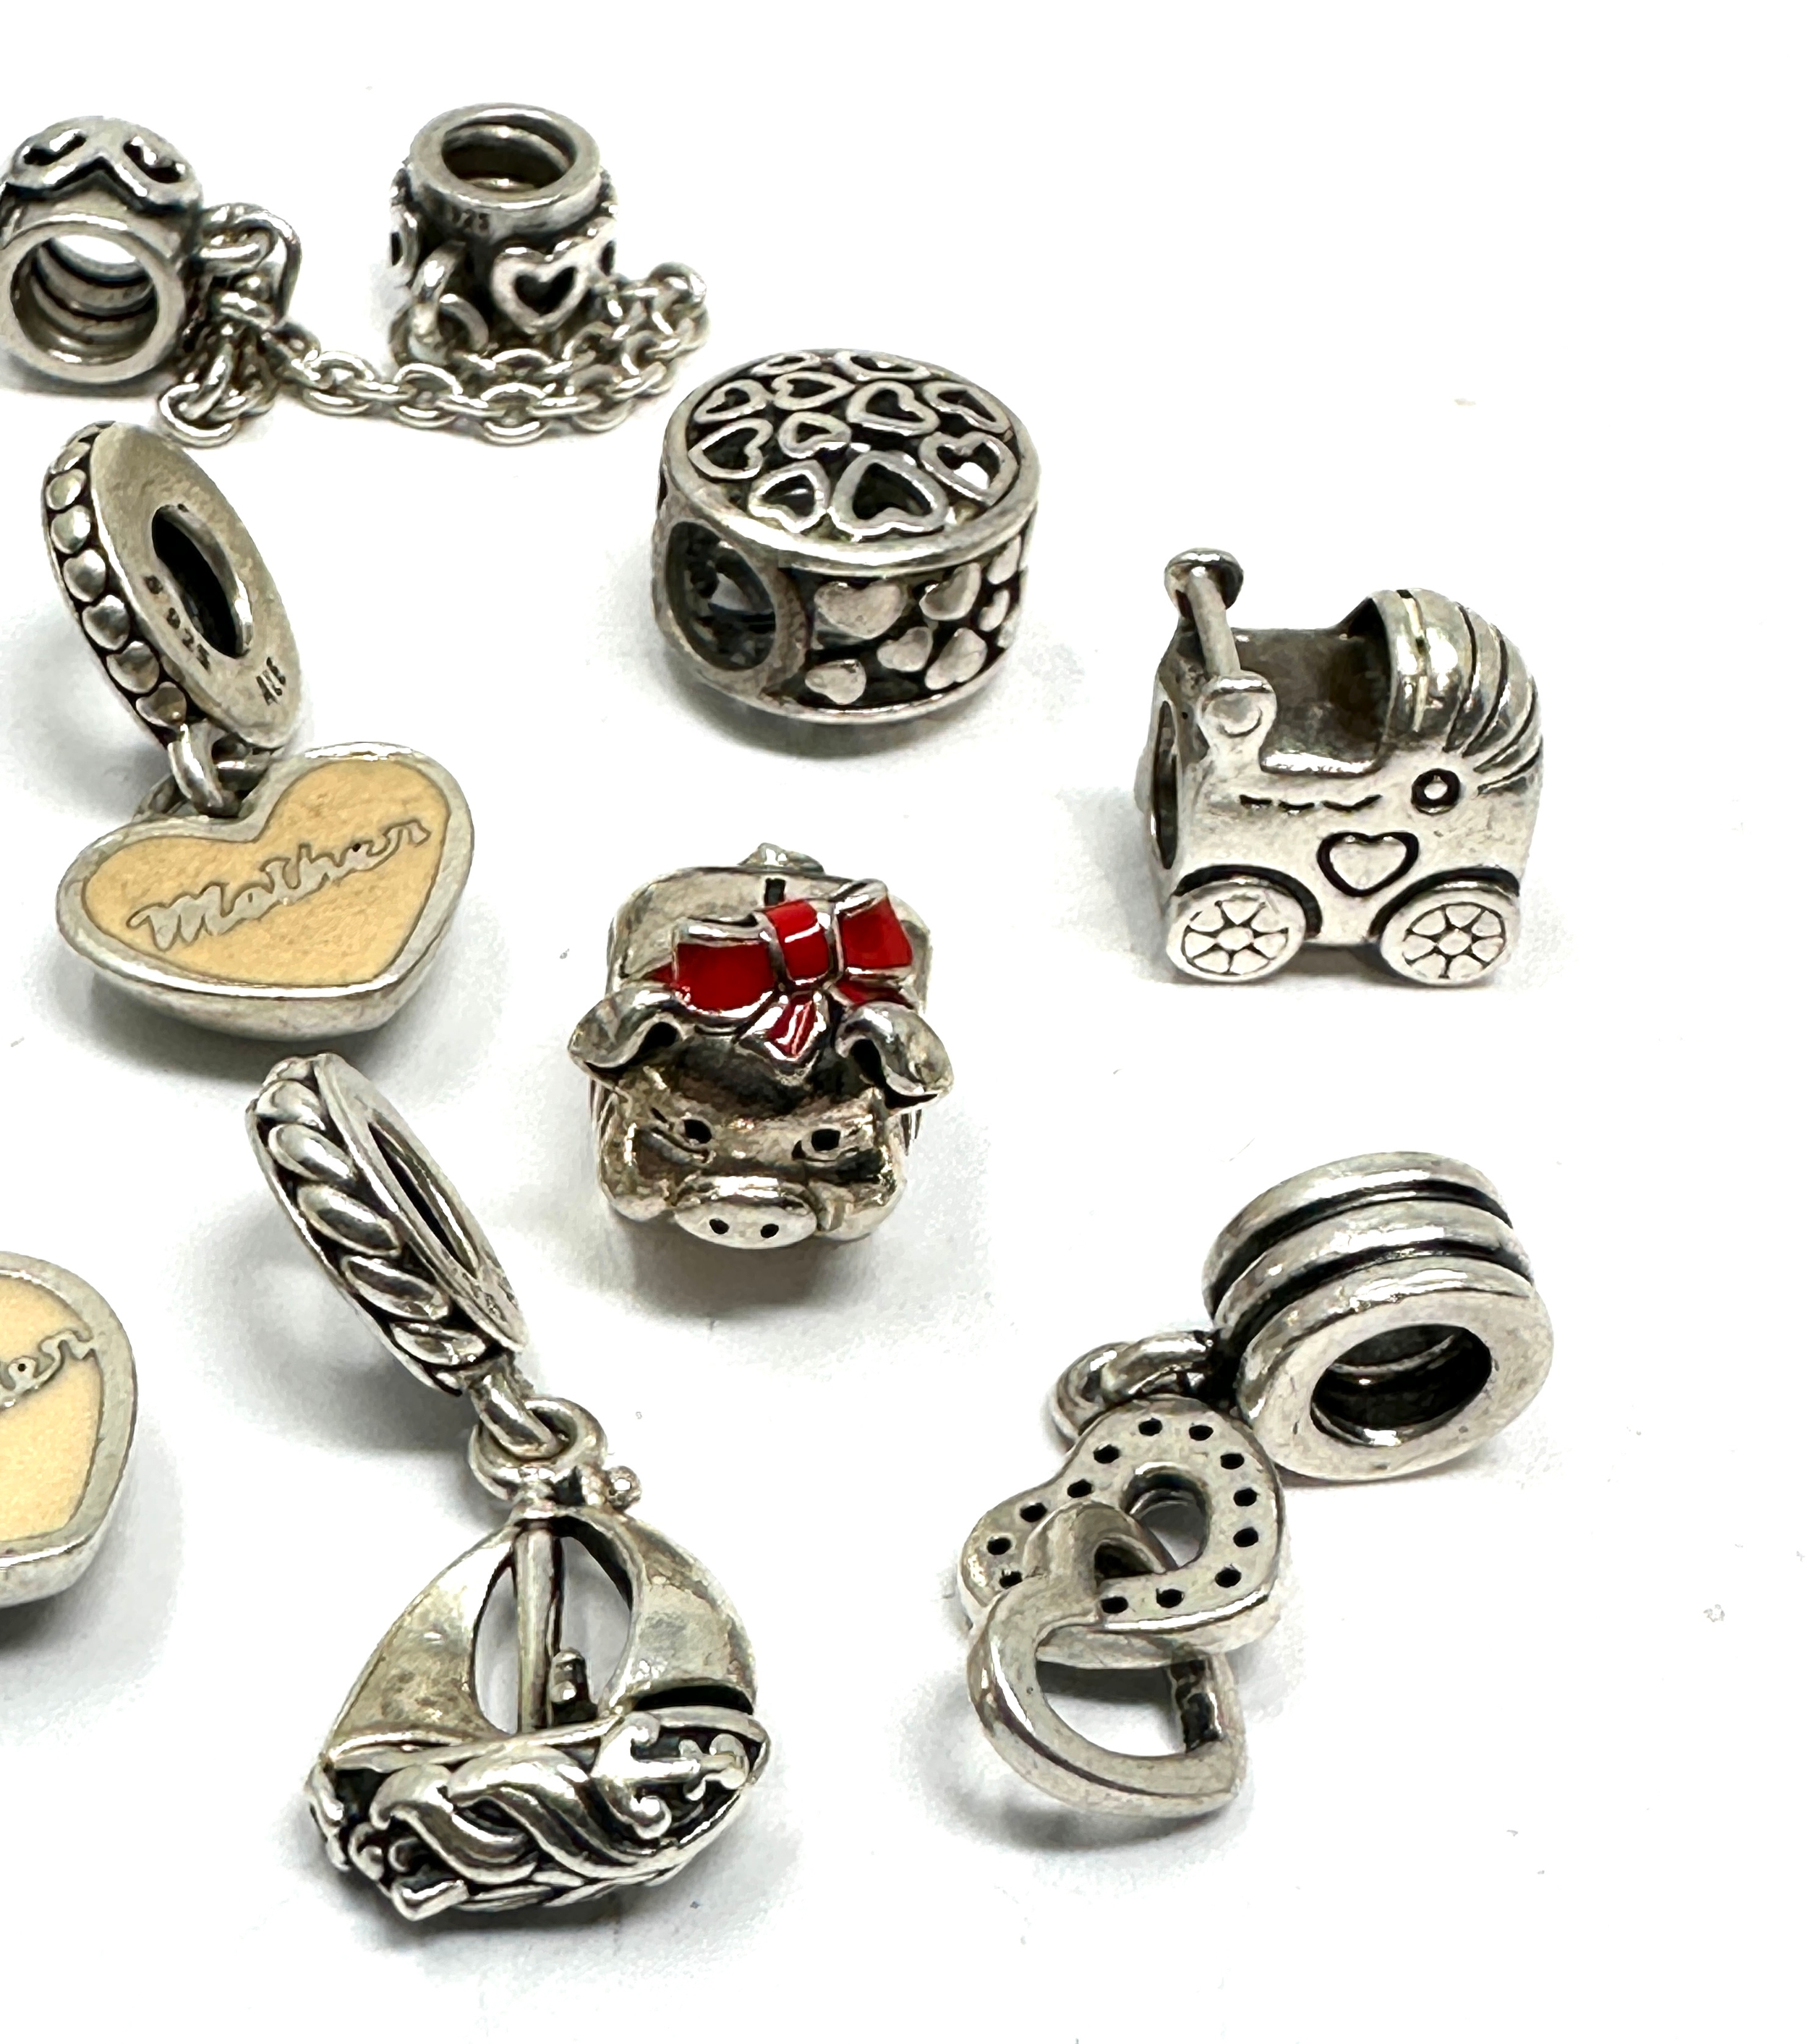 8 silver pandora charms - Image 3 of 3